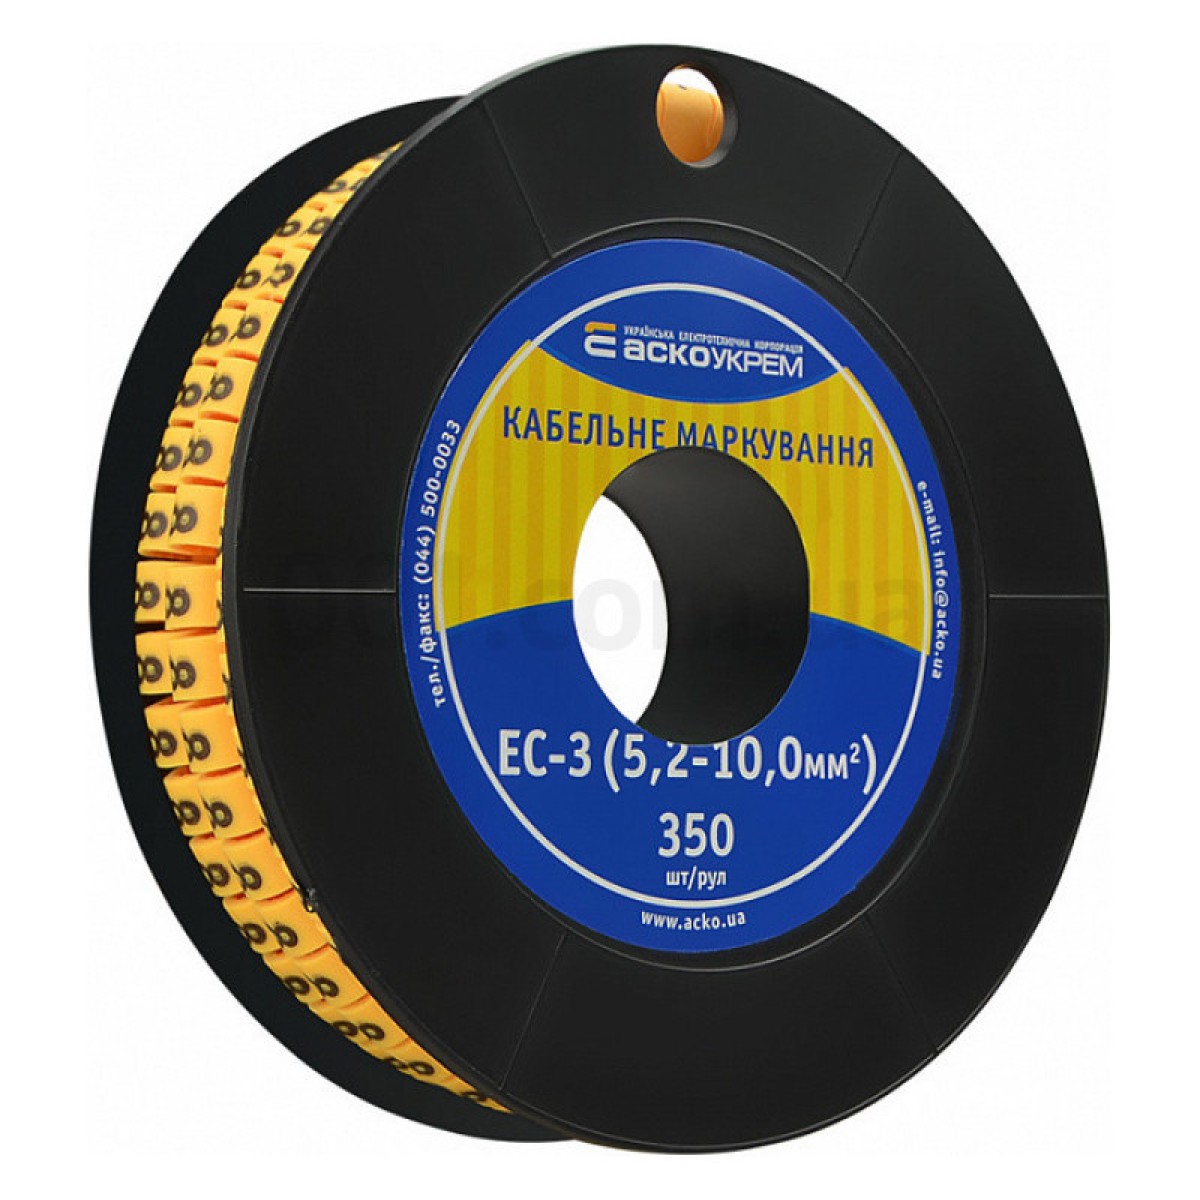 Маркировка EC-3 для кабеля 5,2-10,0 мм² символ «8» (рулон 250 шт.), АСКО-УКРЕМ 98_98.jpg - фото 1